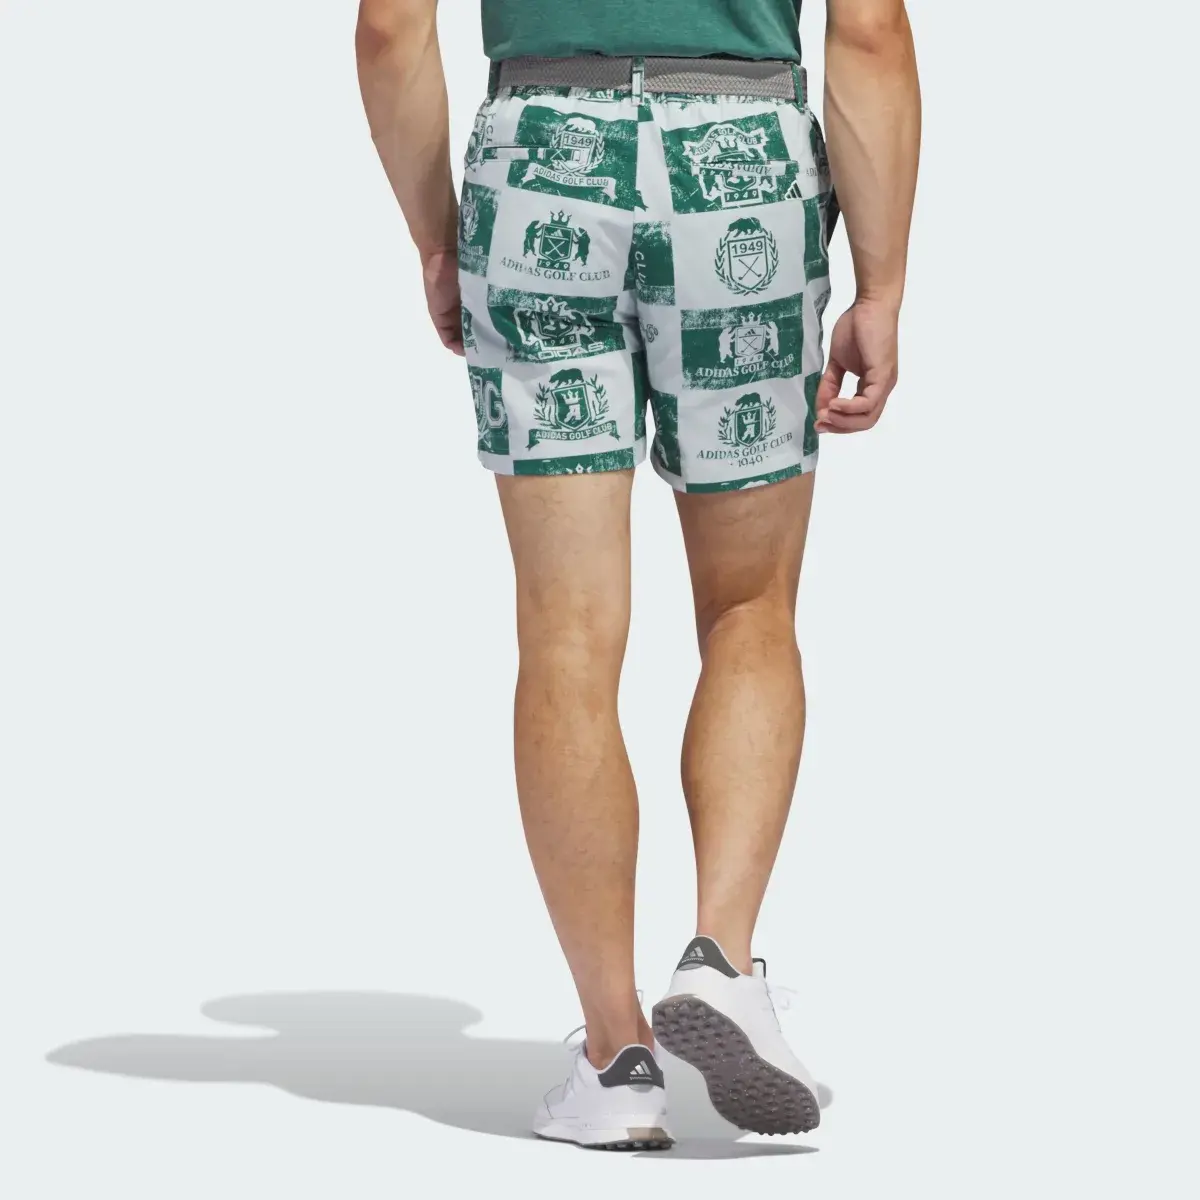 Adidas Go-To Printed Shorts. 2